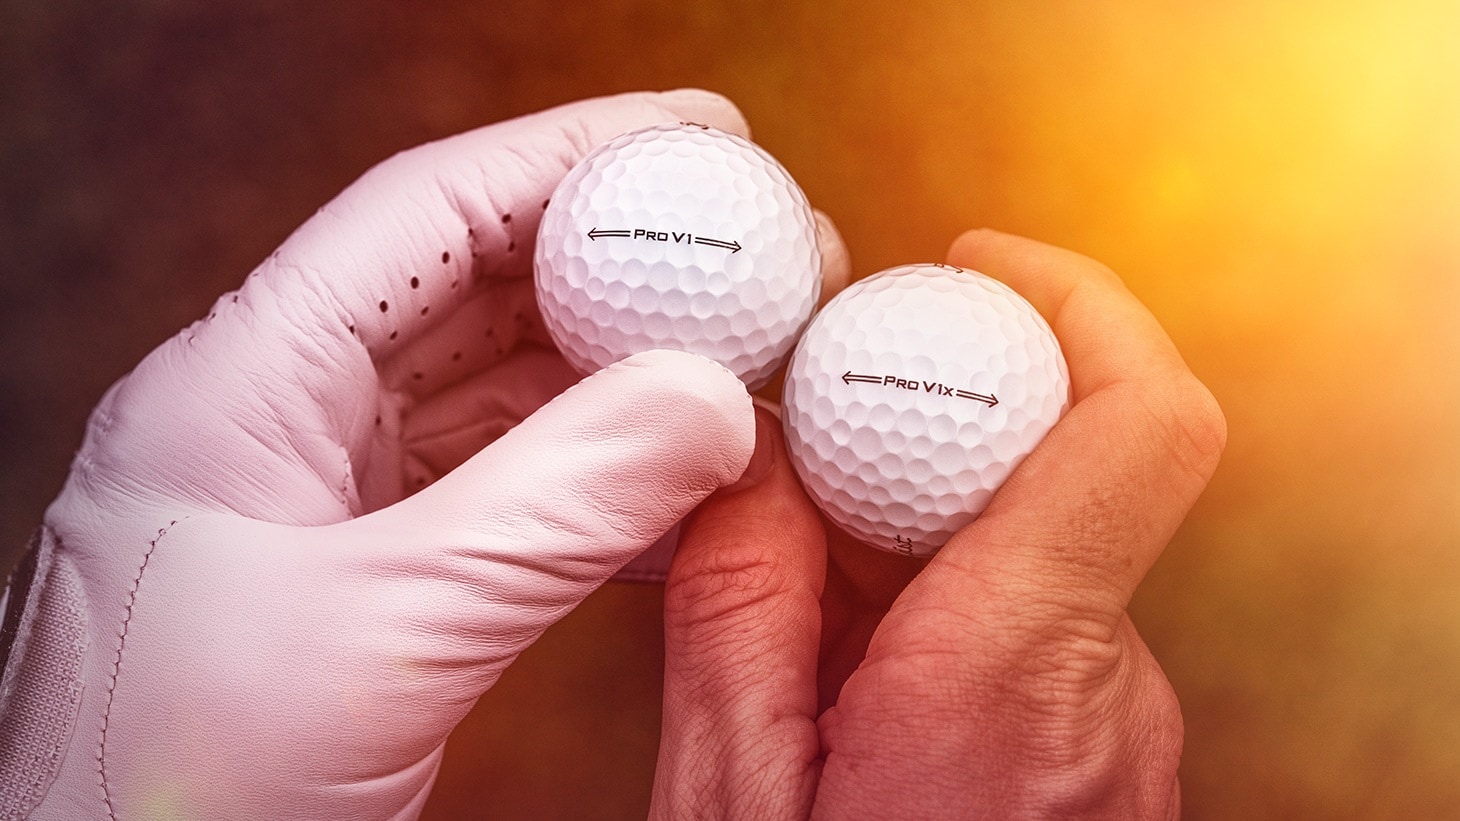 A golfer admires the new sidestamp designs on the 2021 Titleist Pro V1 and Pro V1x golf balls.